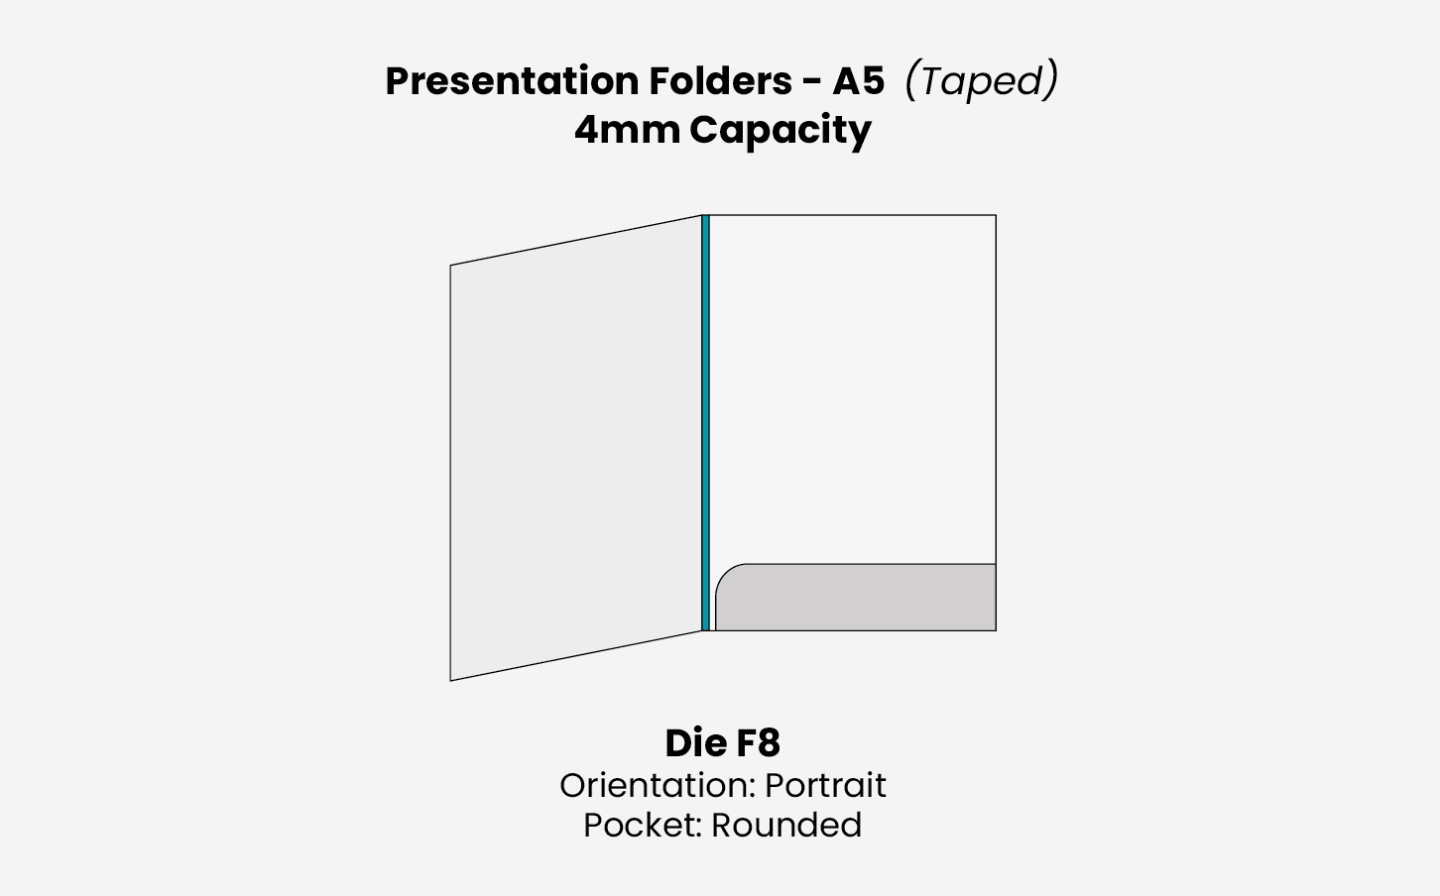 A5 Presentation Folder - Taped - 4mm Capacity